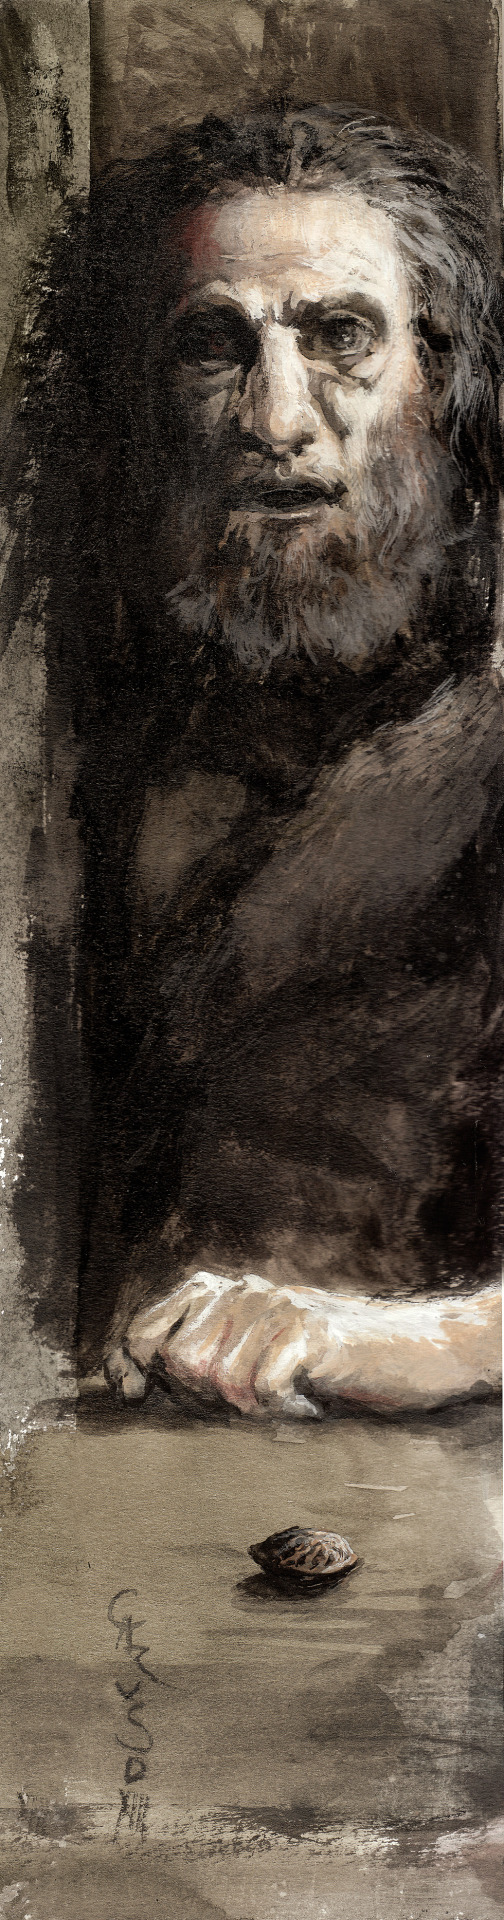 

Santiago Caruso / Study in gouache and tempera for “La Tentation de Saint Antoine” / 8 cm x 31,5 cm

